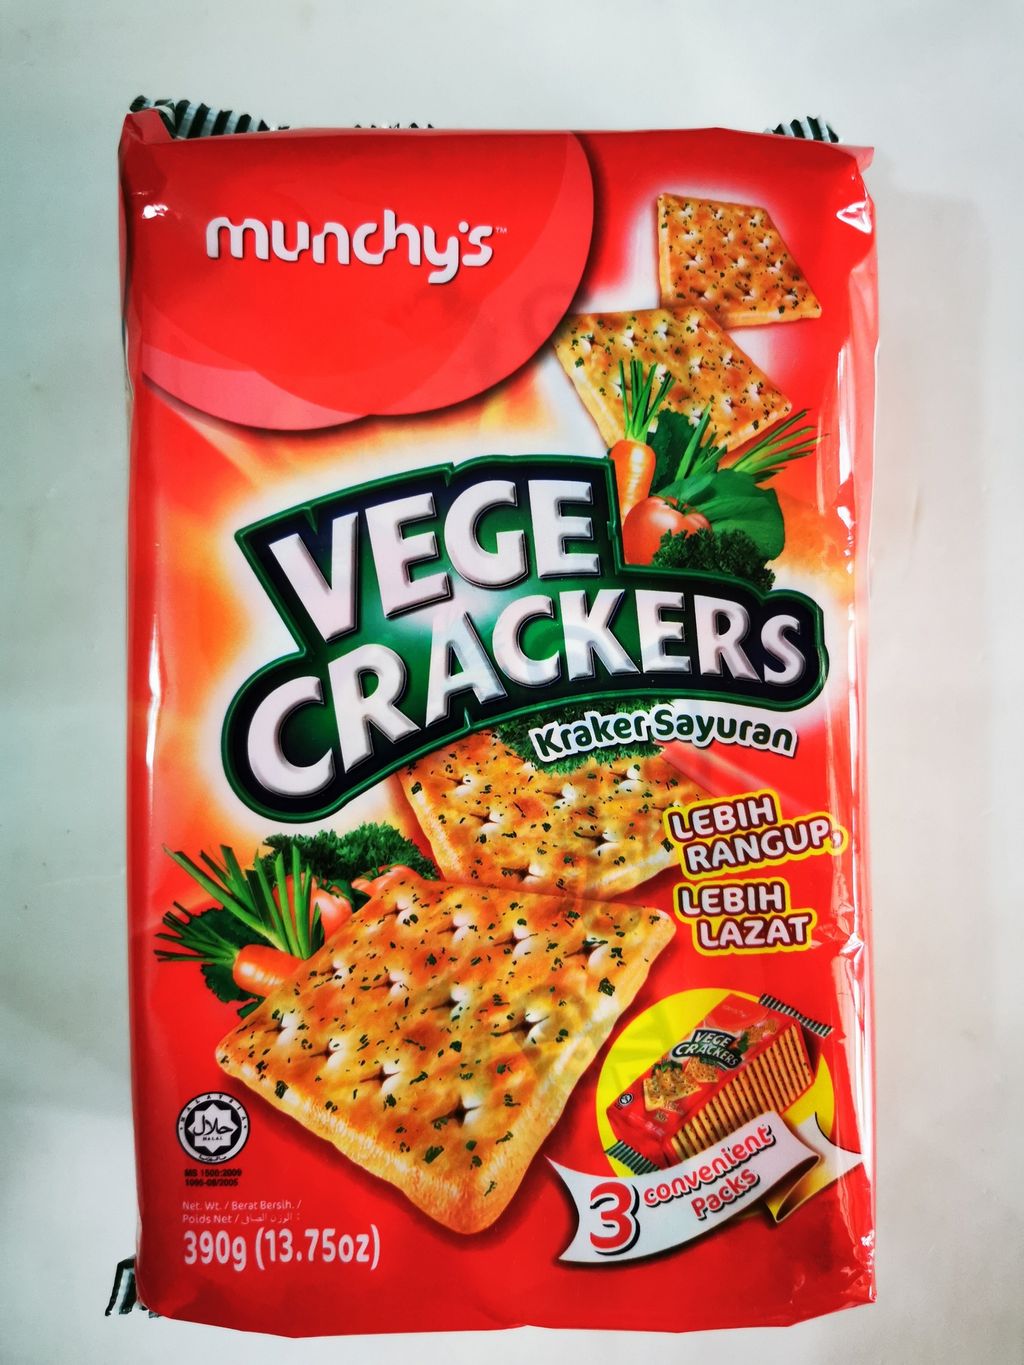 Munchy's Vege Crackers.jpg